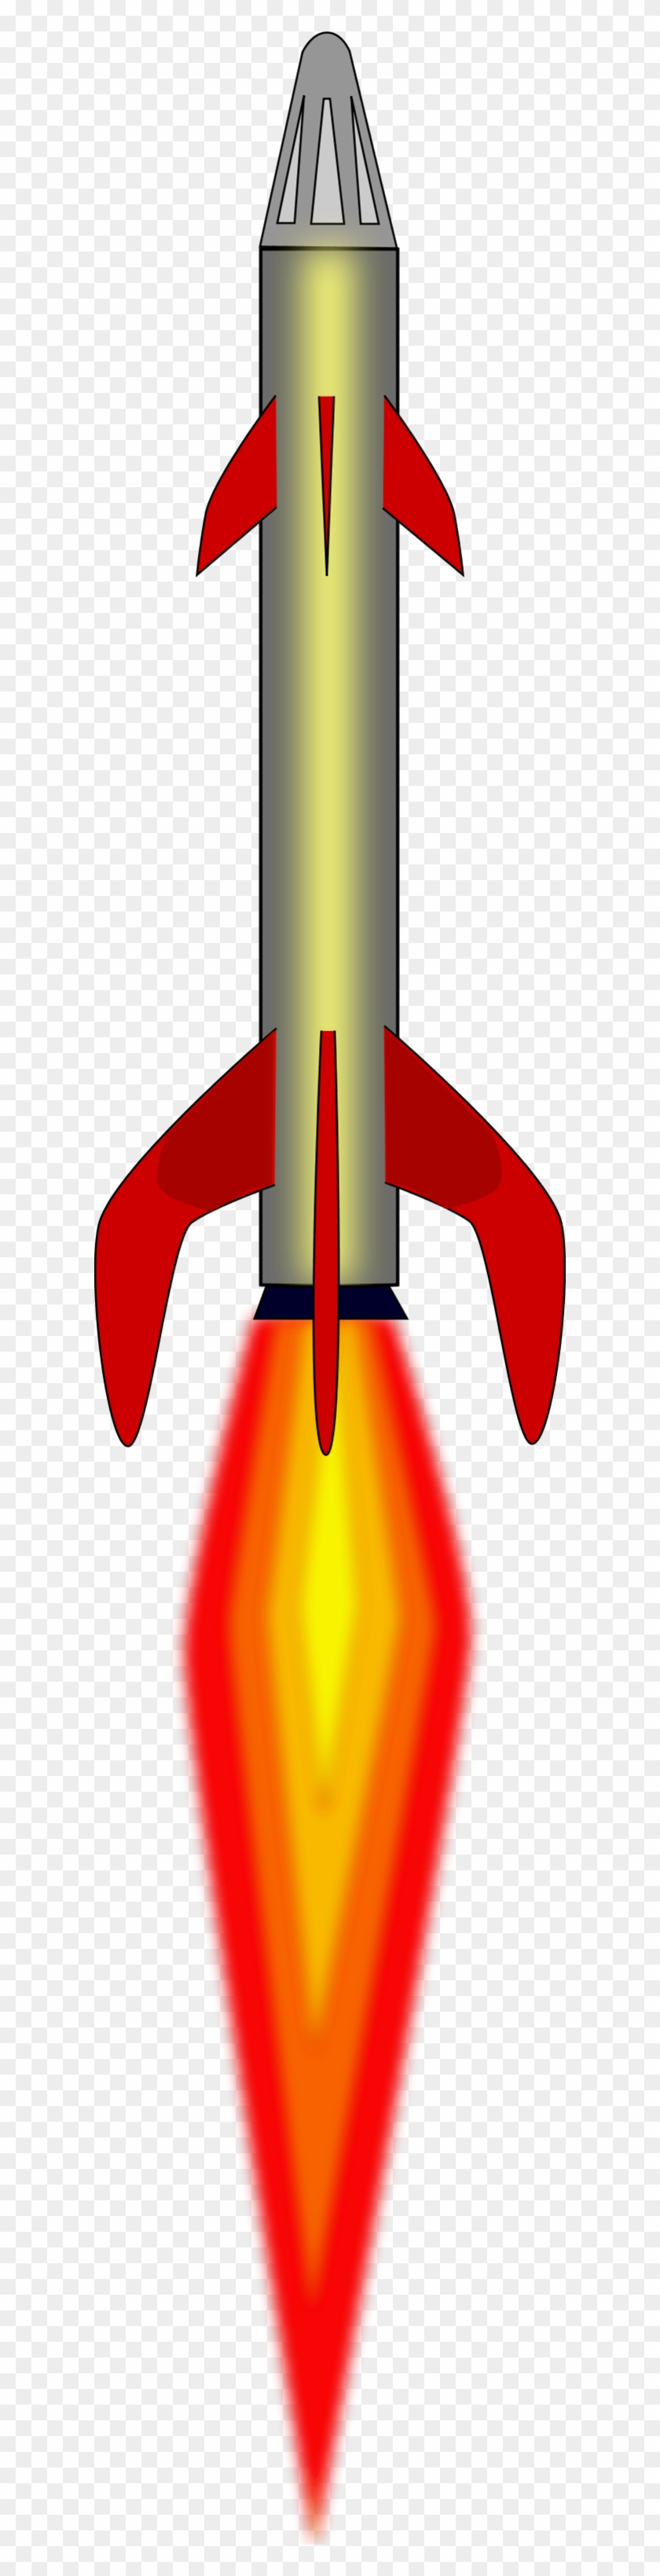 Space Rocket Cartoon Liftoff Blast - Rocket Launcher Rocket Png #444178